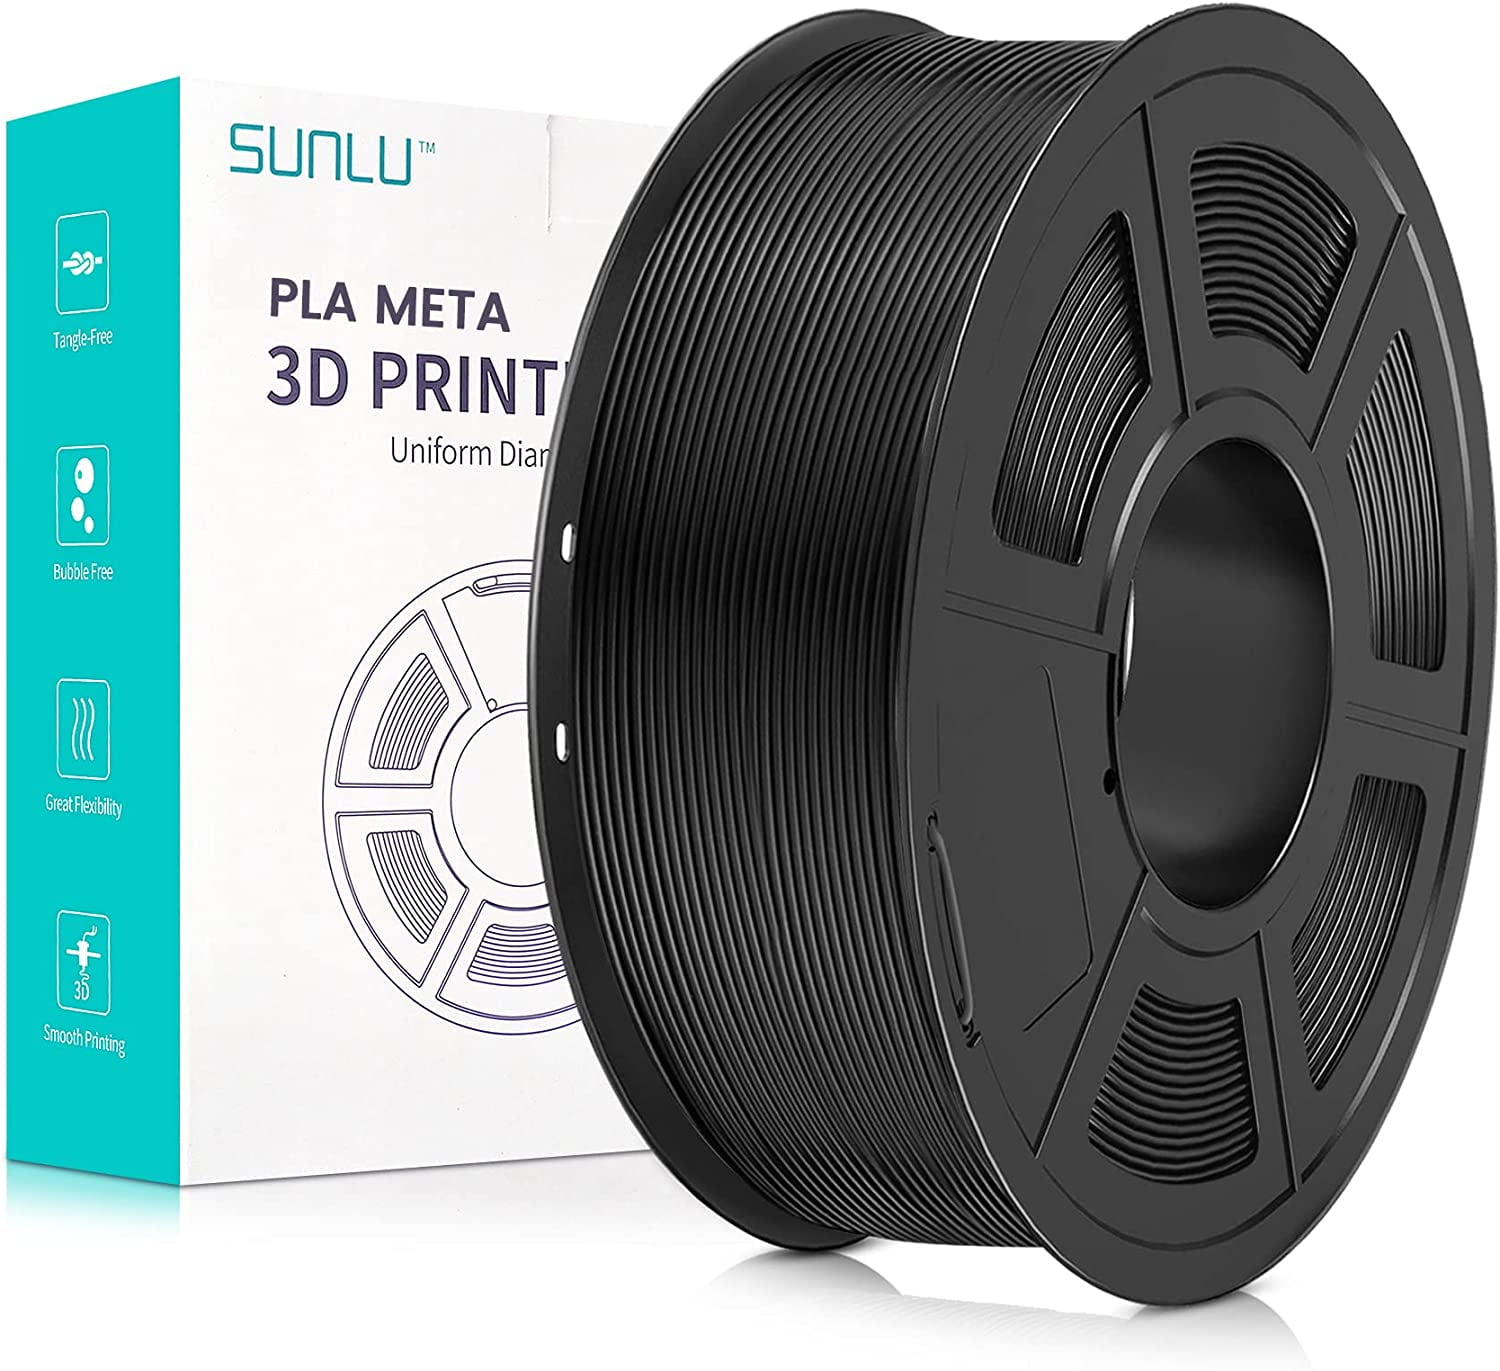 SUNLU PLA Meta 3D Printer Filament, High Toughness PLA Meta Filament 1.75mm , No Clogging, Highly Fluid, Fast Printing for 3D Printer,Dimensional Accuracy +/- 0.02 KG Spool,Black - Walmart.com